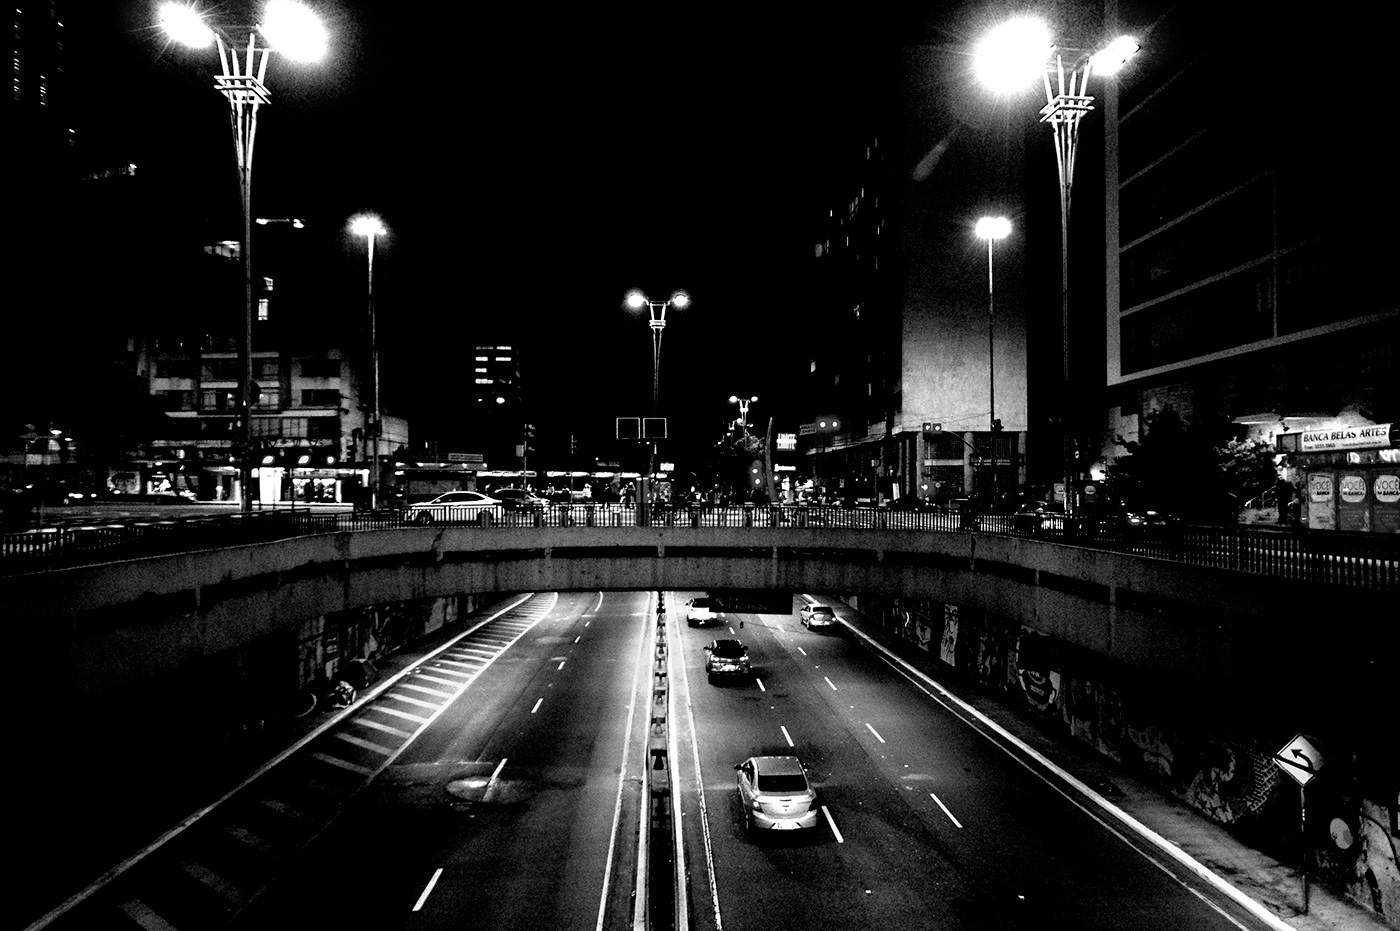 #pentaxk3ii black and white city nightcity nightphotography photographer Photography  portrait street photography Urban